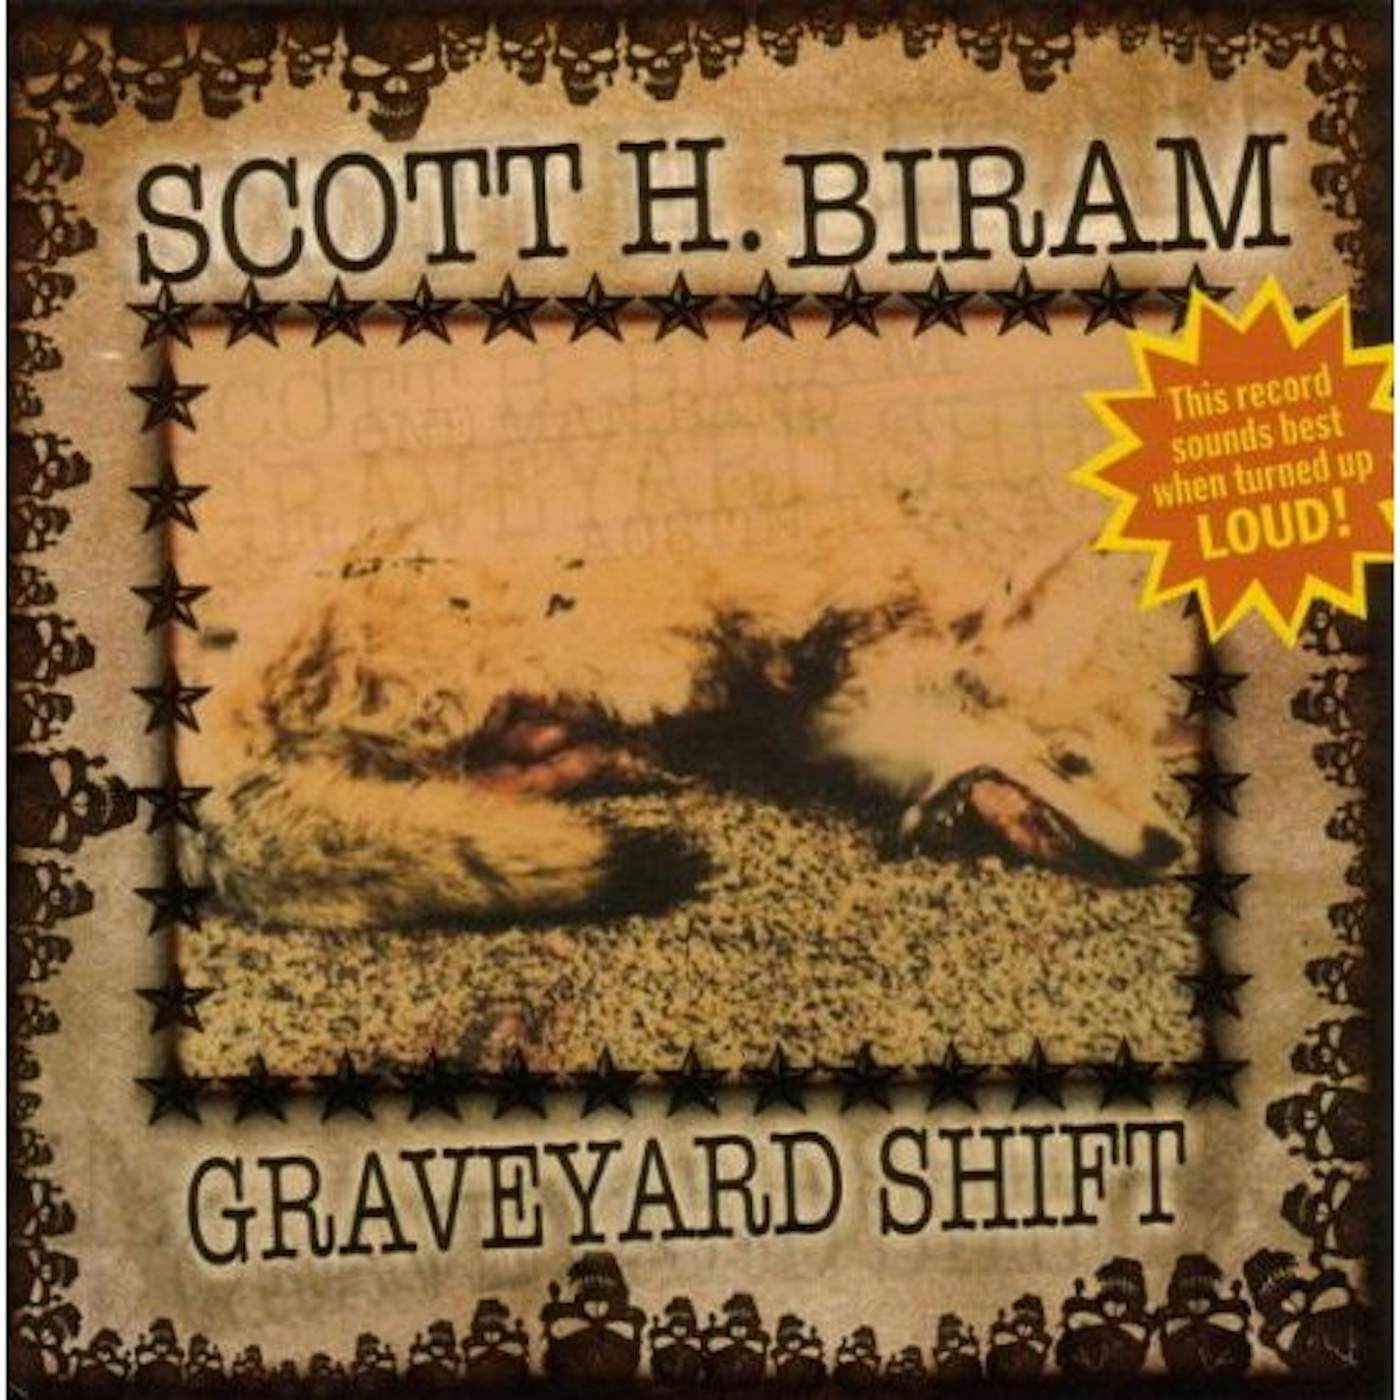 Scott H. Biram GRAVEYARD SHIFT CD